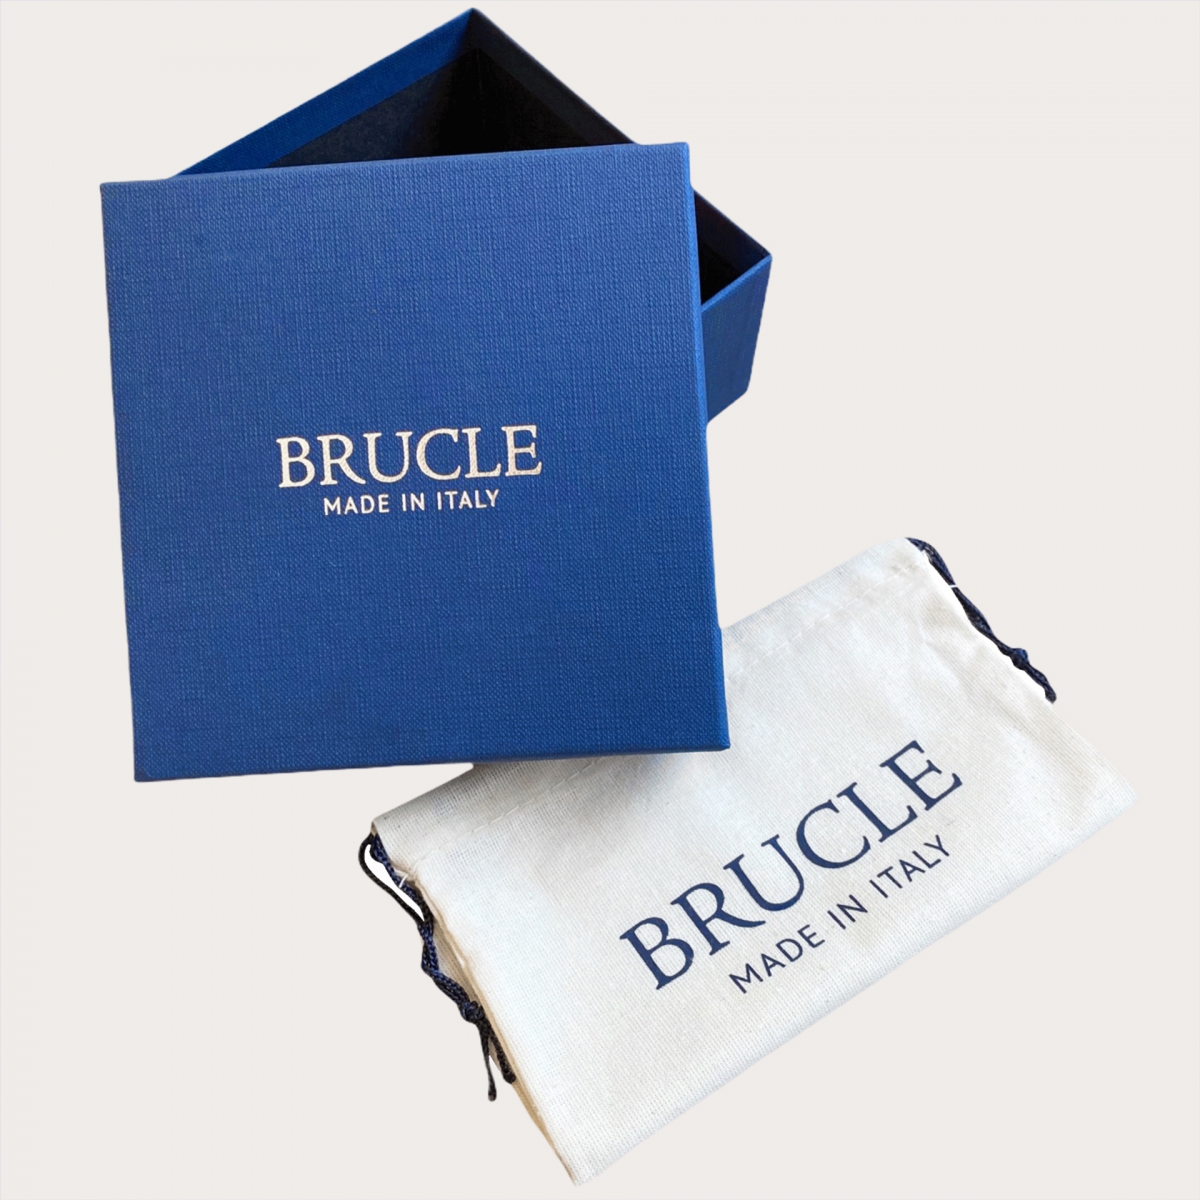 BRUCLE Luxus-Gürtel in rubinroter Krokodilleder